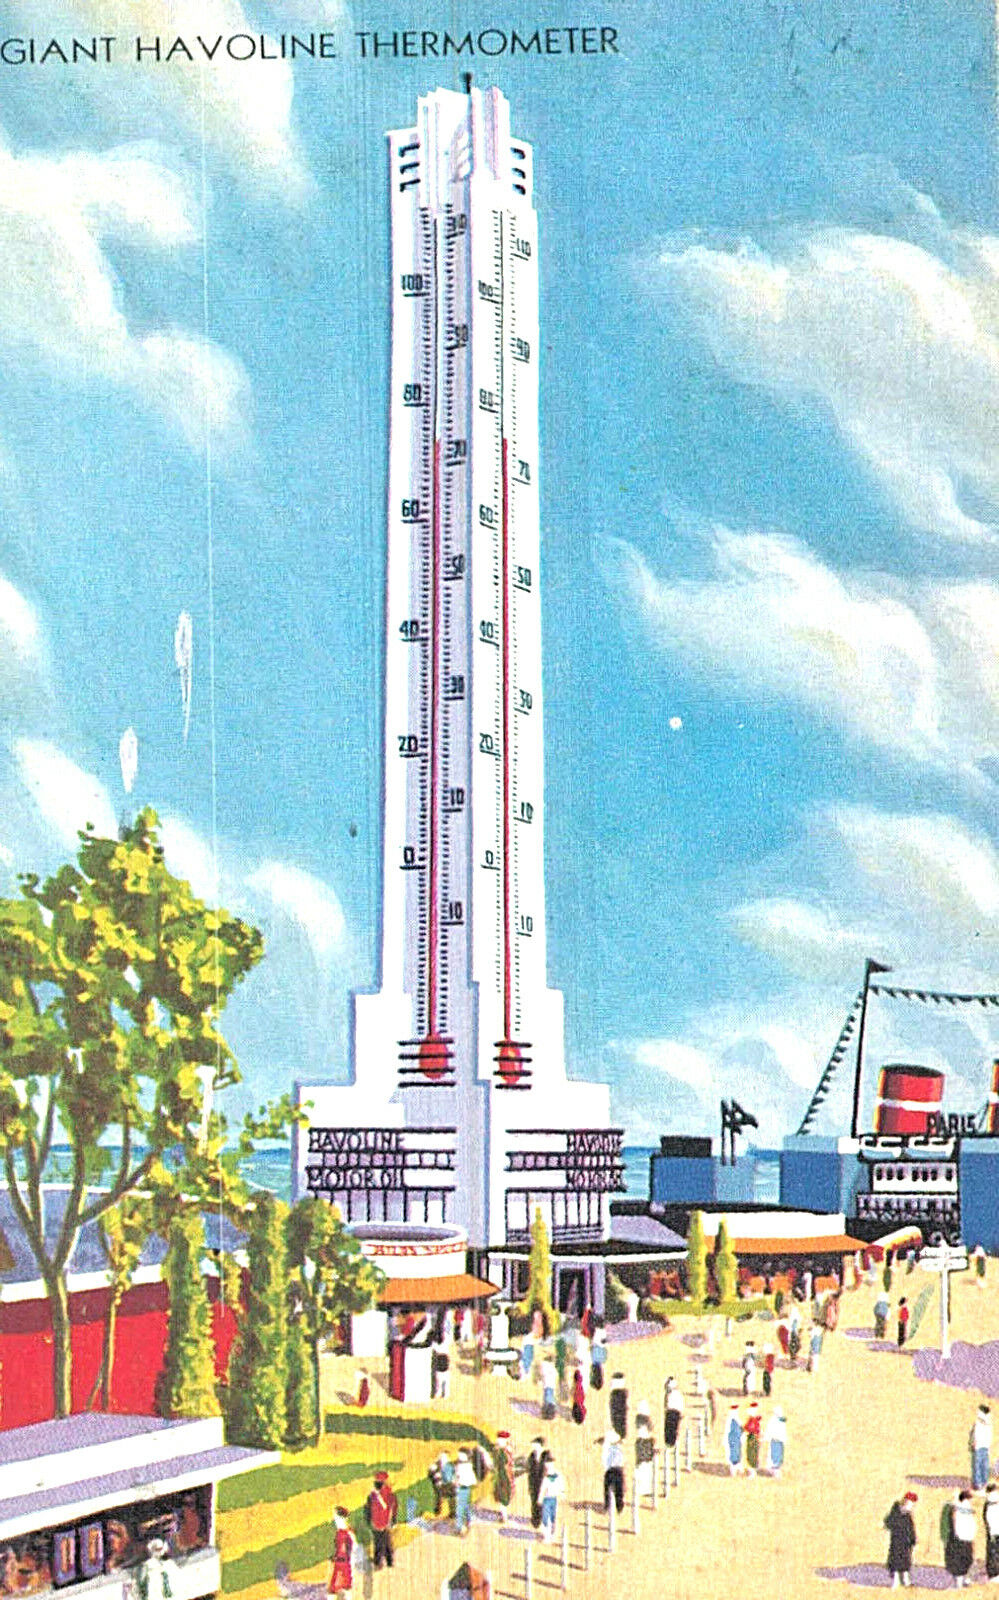 VIntage Postcard-Giant Havoline Thermoter, Chicago's 1933 International Expo, IL